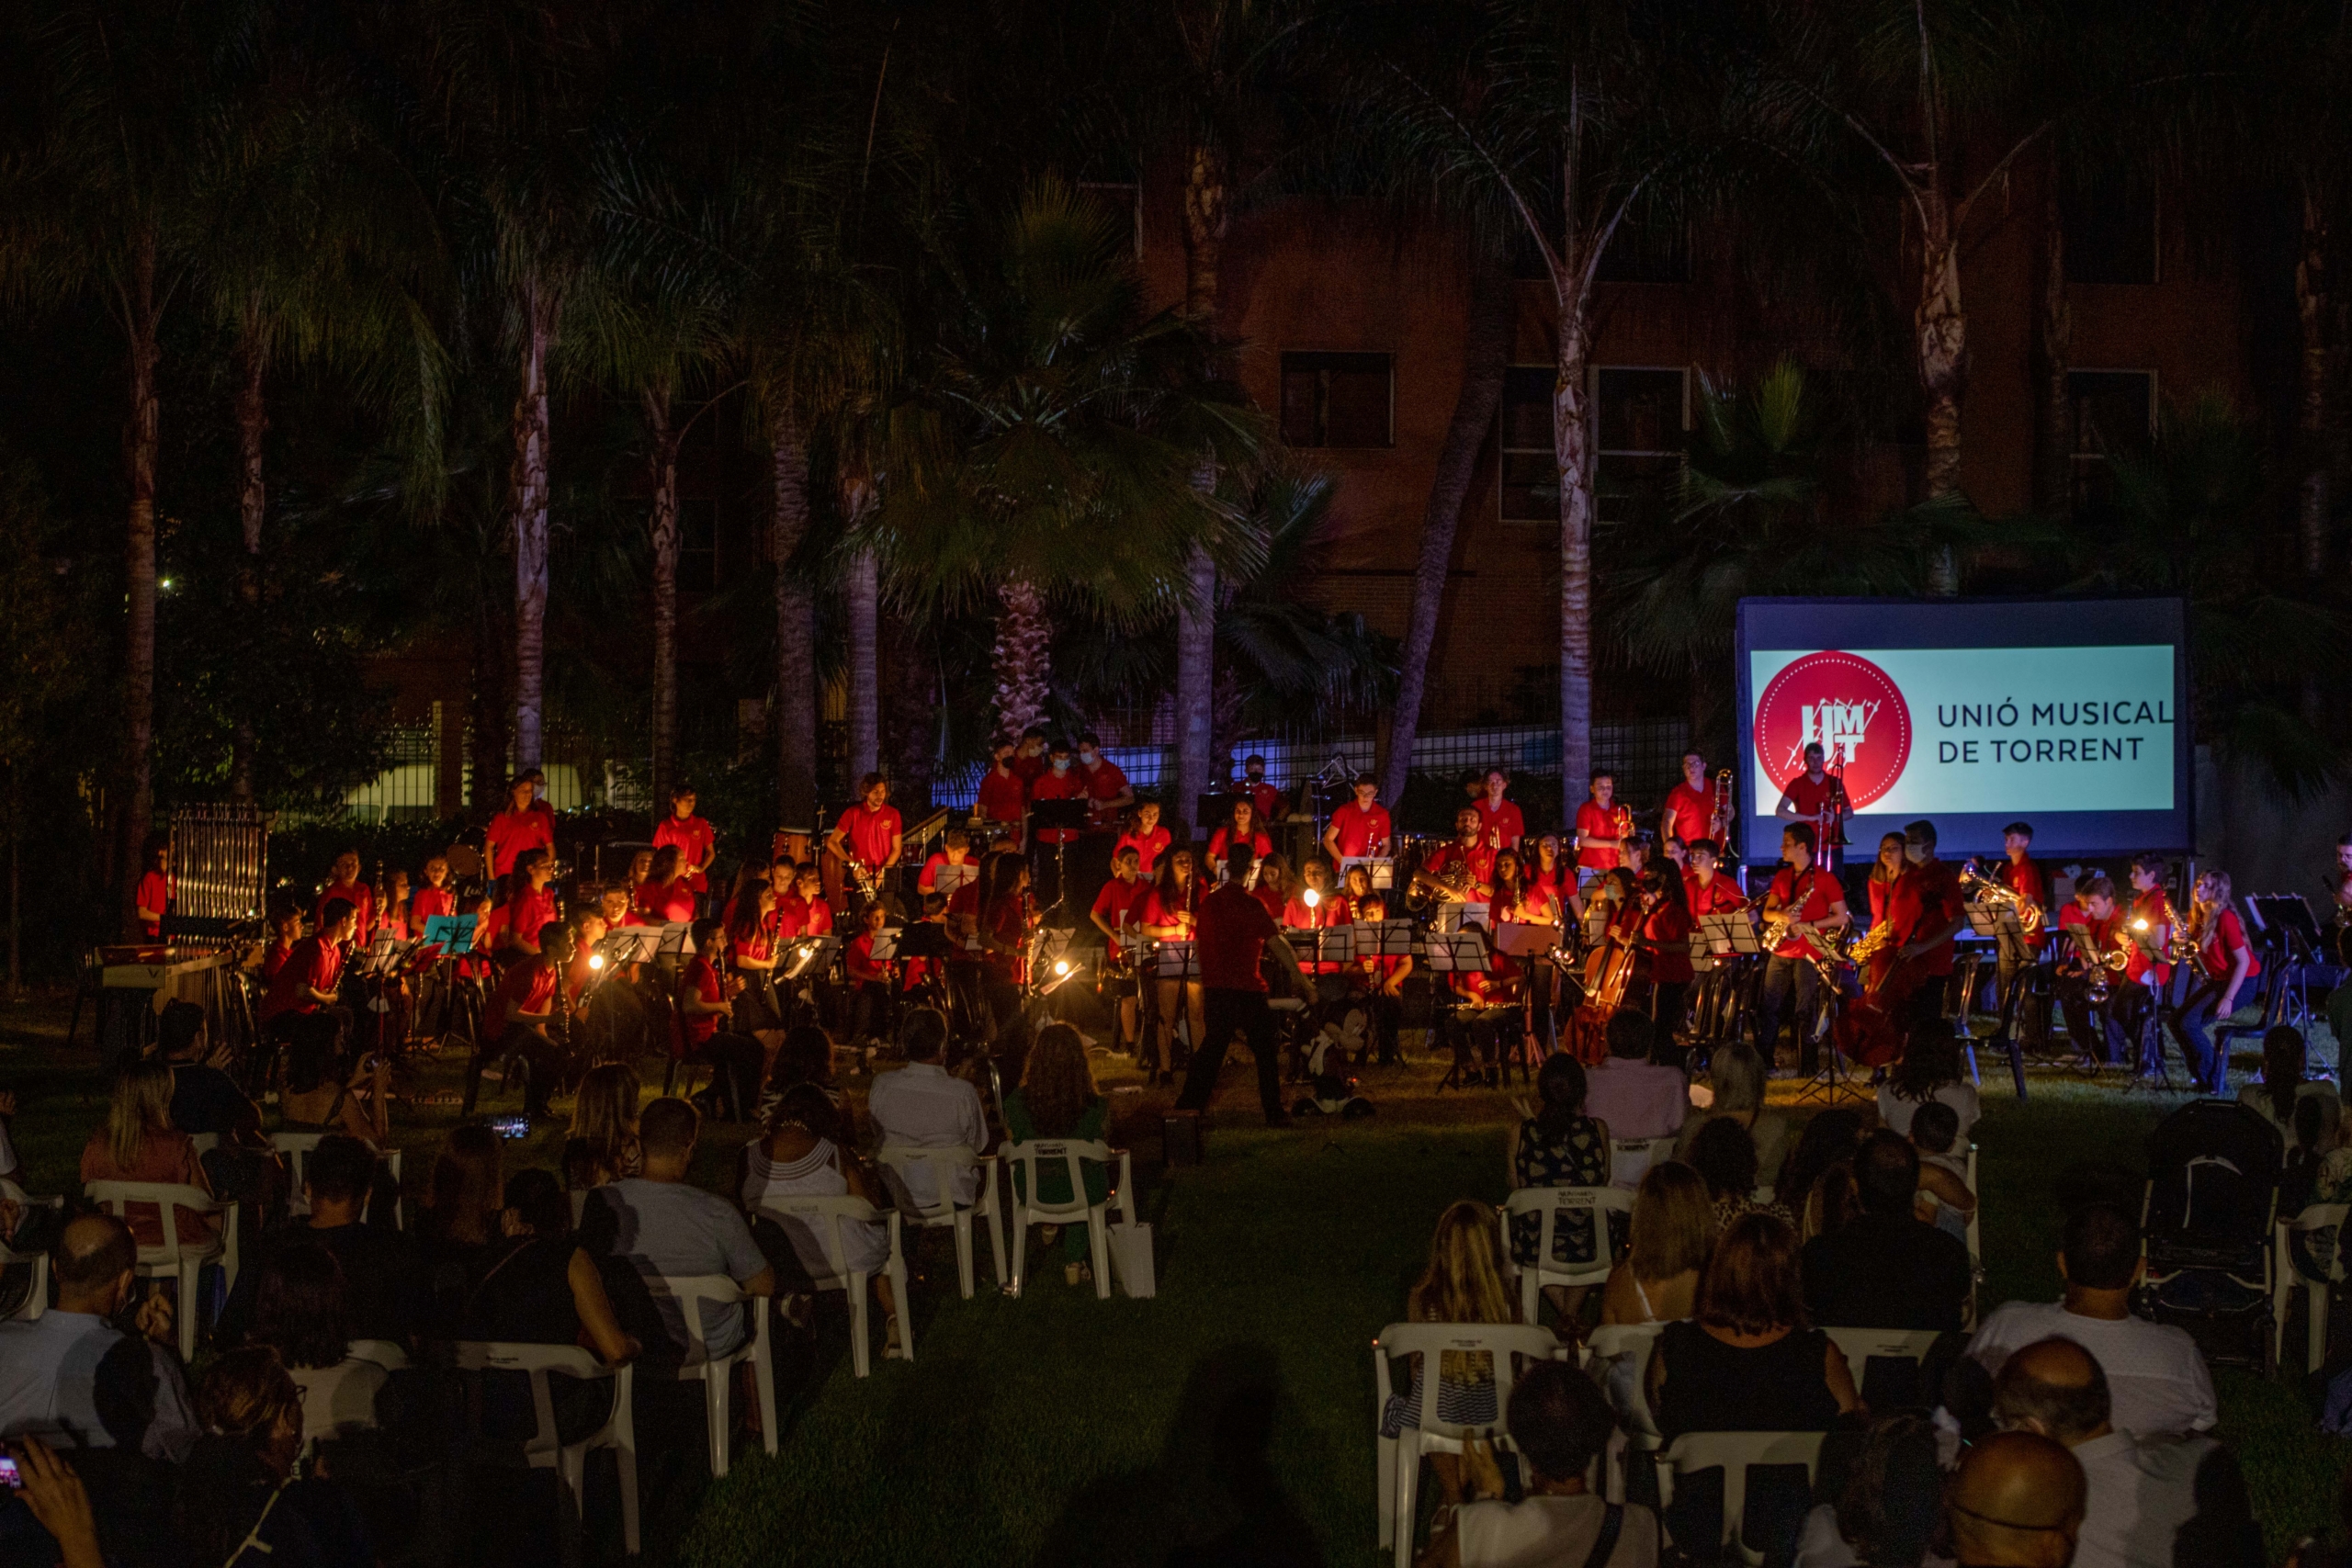 La Unió Musical de Torrent celebra su concierto de final de curso en L’Hort de Trénor­­­­